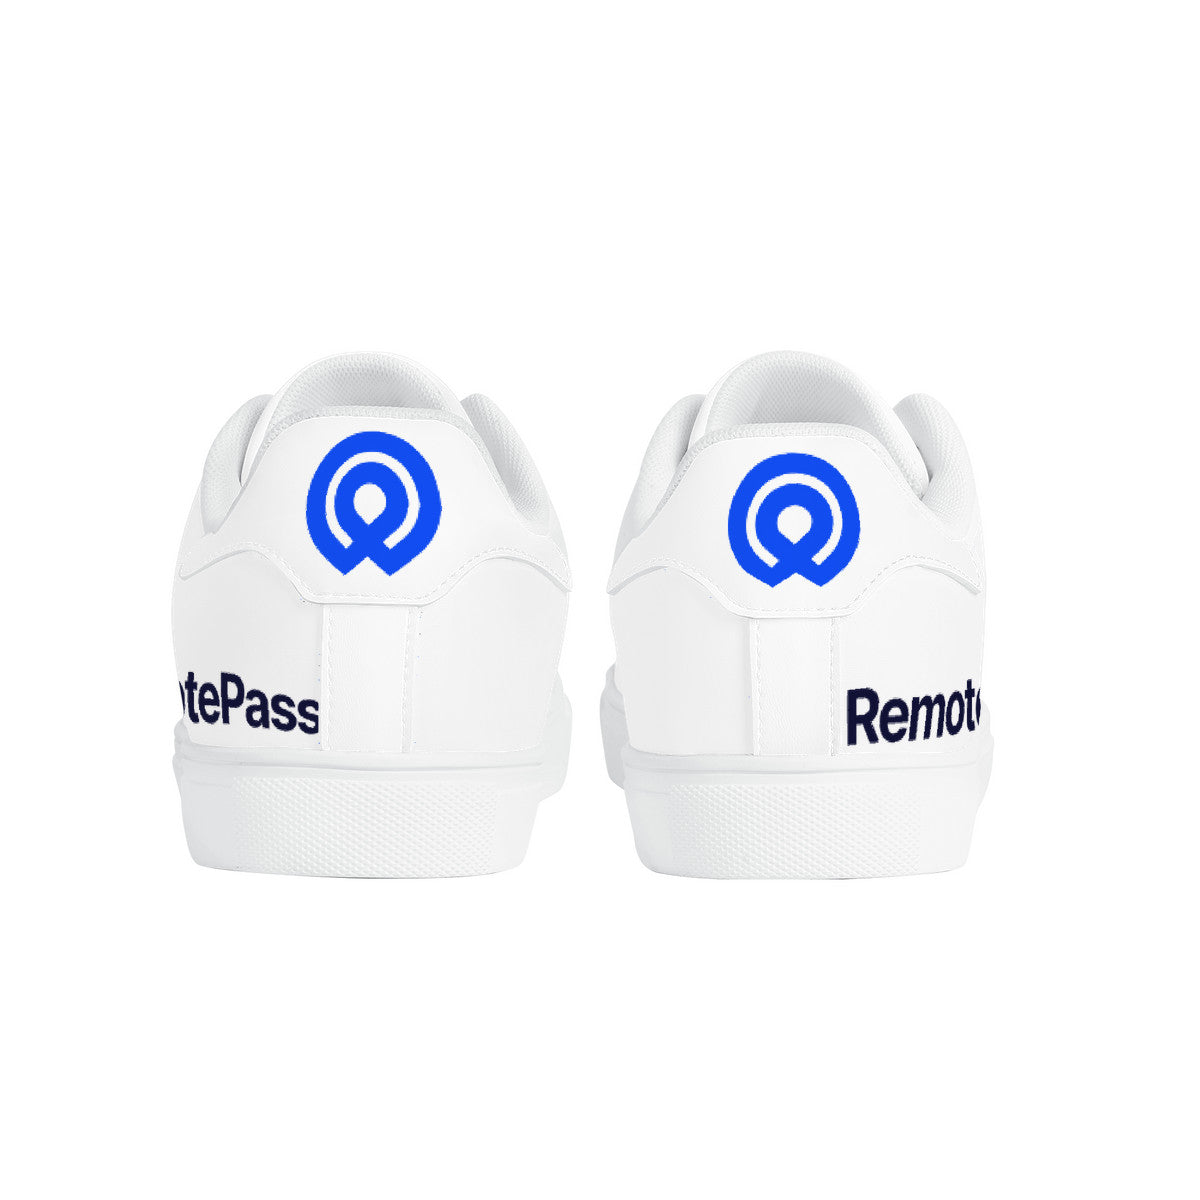 Remote Pass | Branded Shoe | Shoe Zero